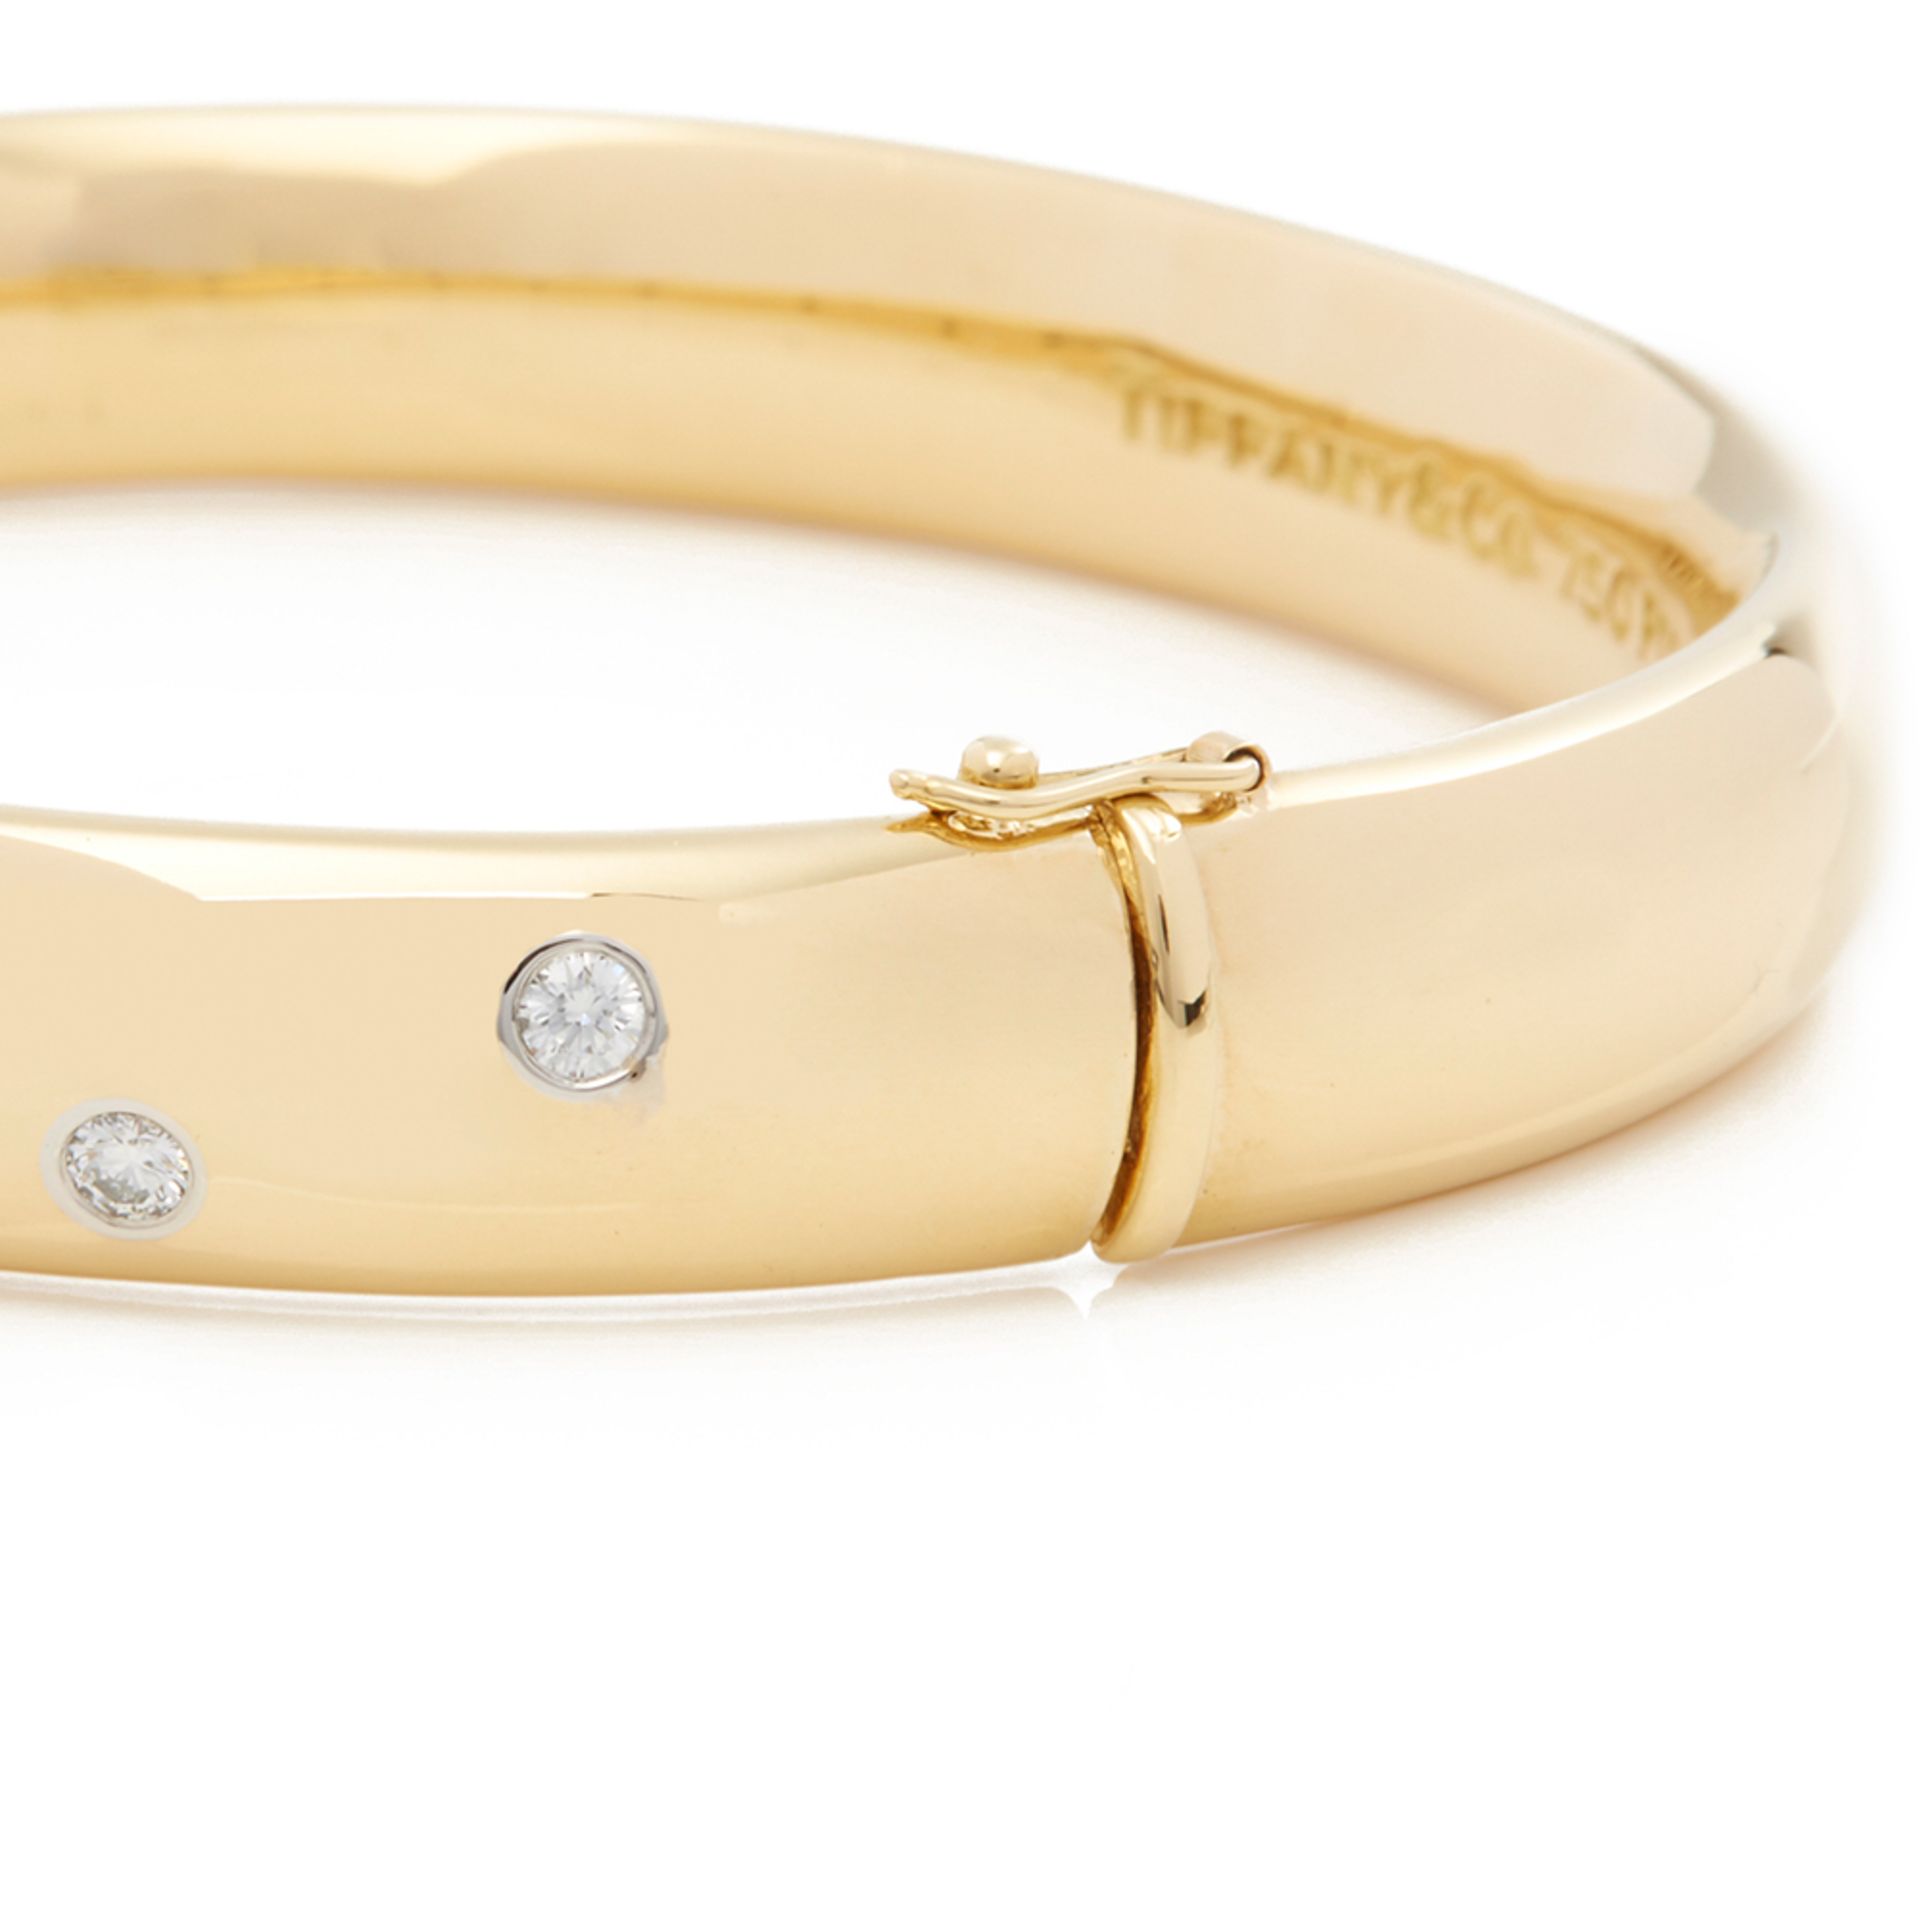 Tiffany & Co. 18k Yellow Gold Diamond Etoile Bracelet ***Reserve lowered*** - Image 3 of 9